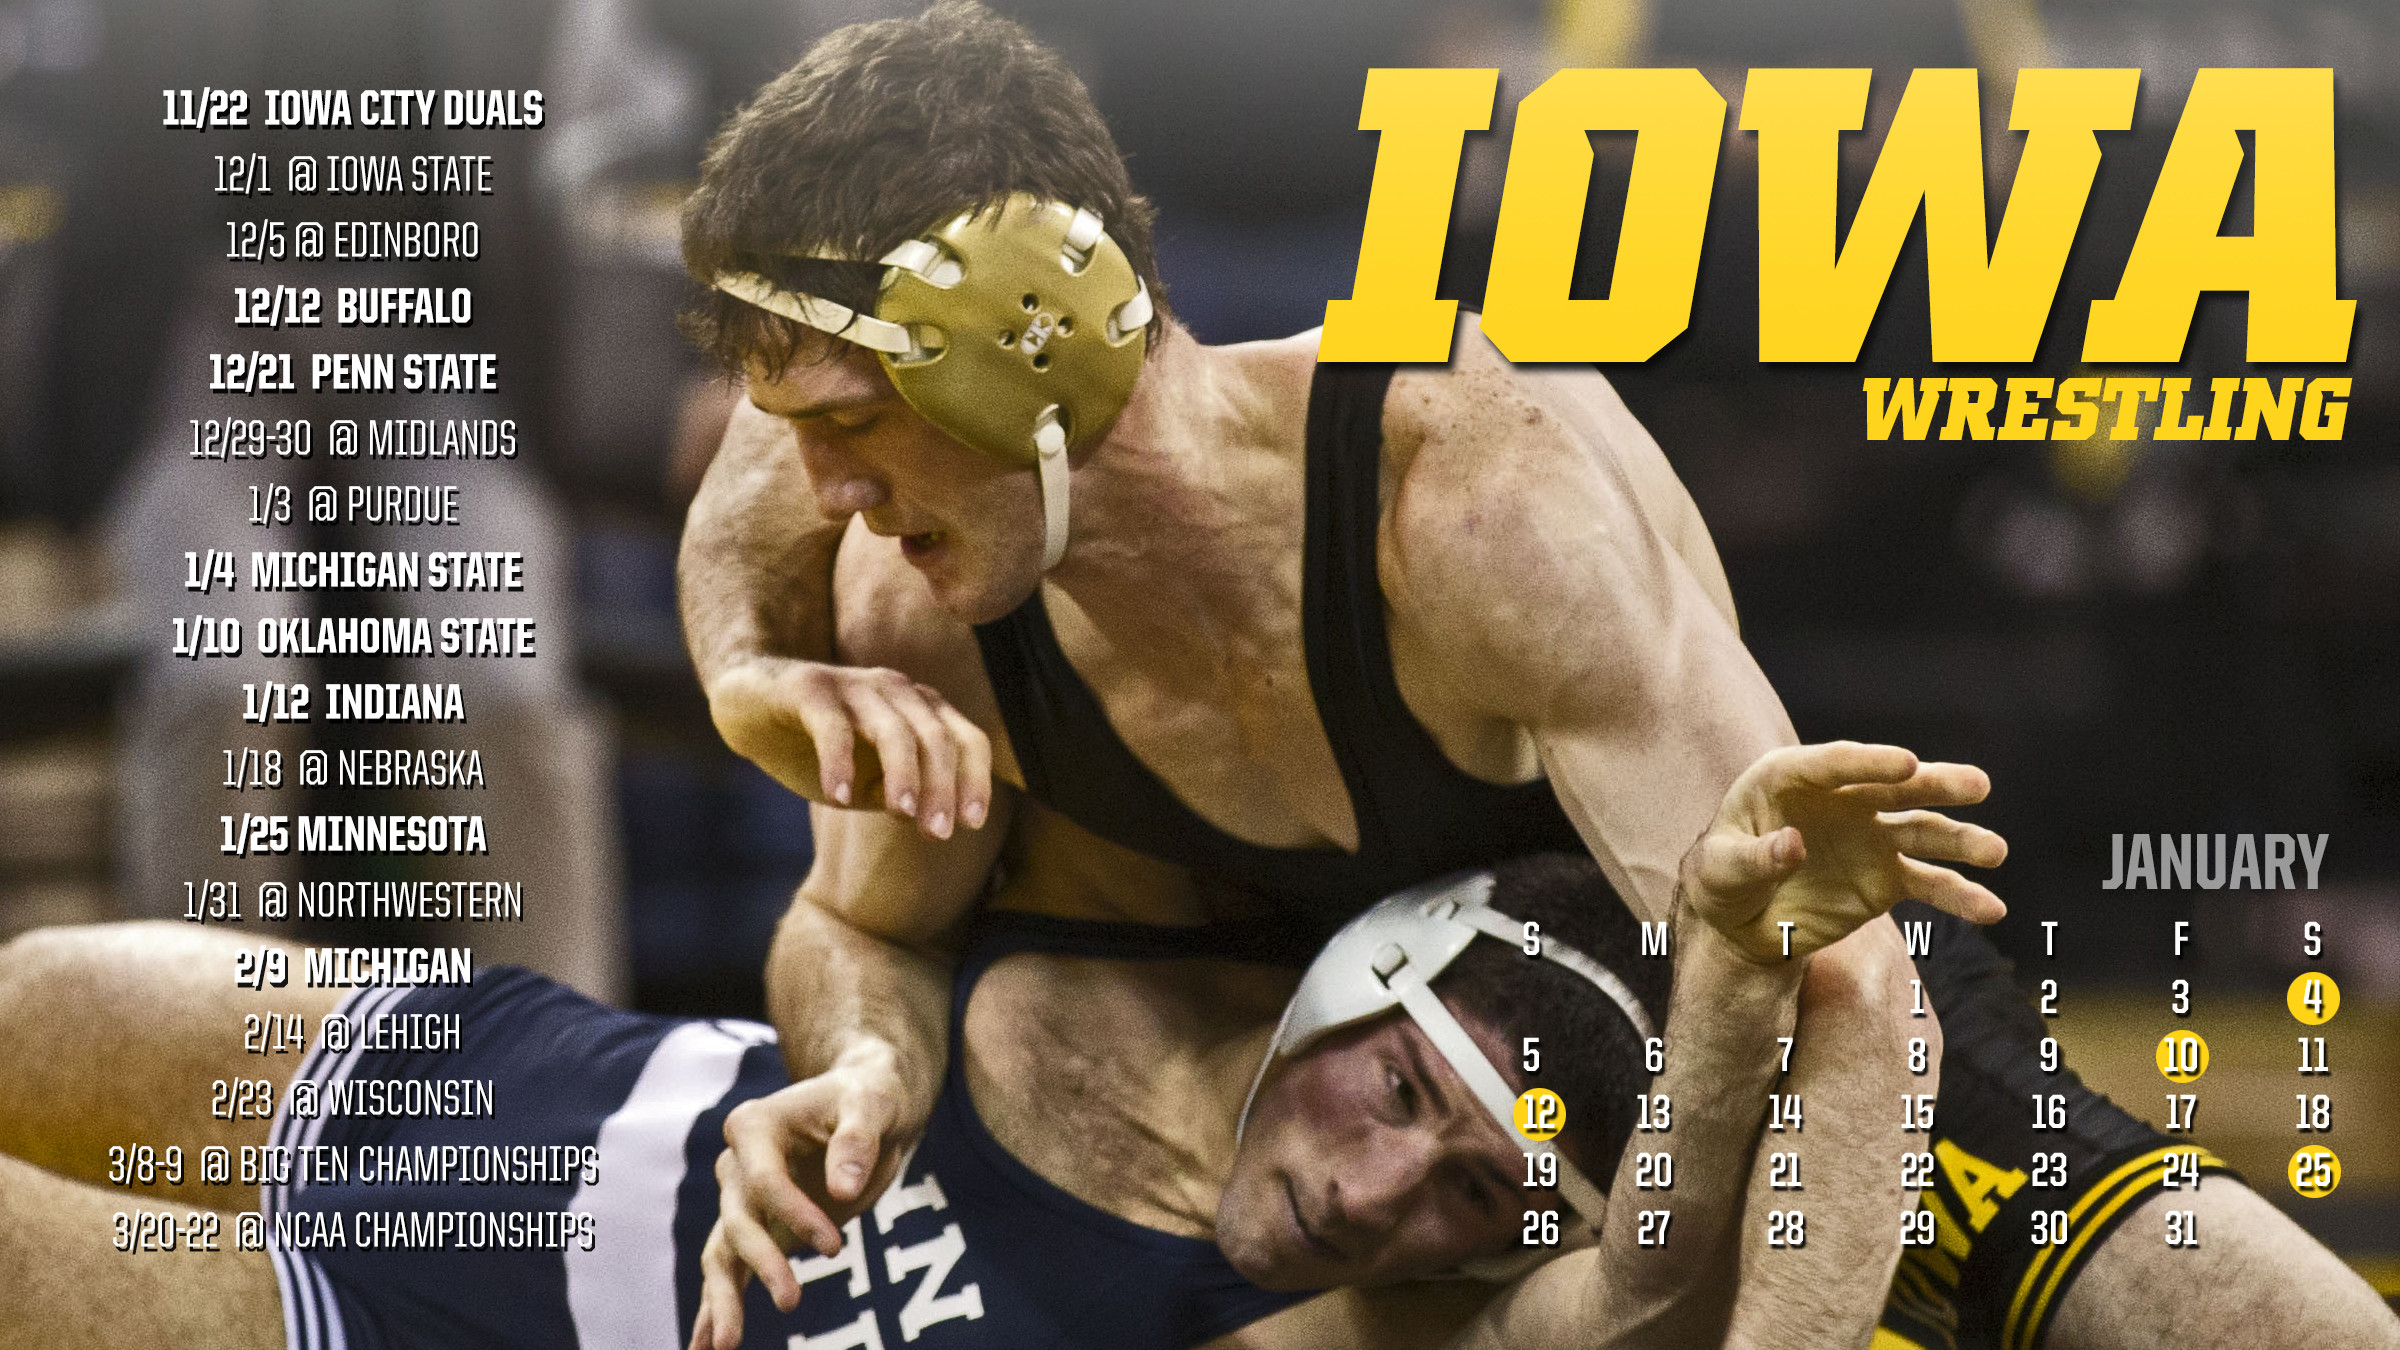 Iowa Hawkeye Wrestling Wallpaper